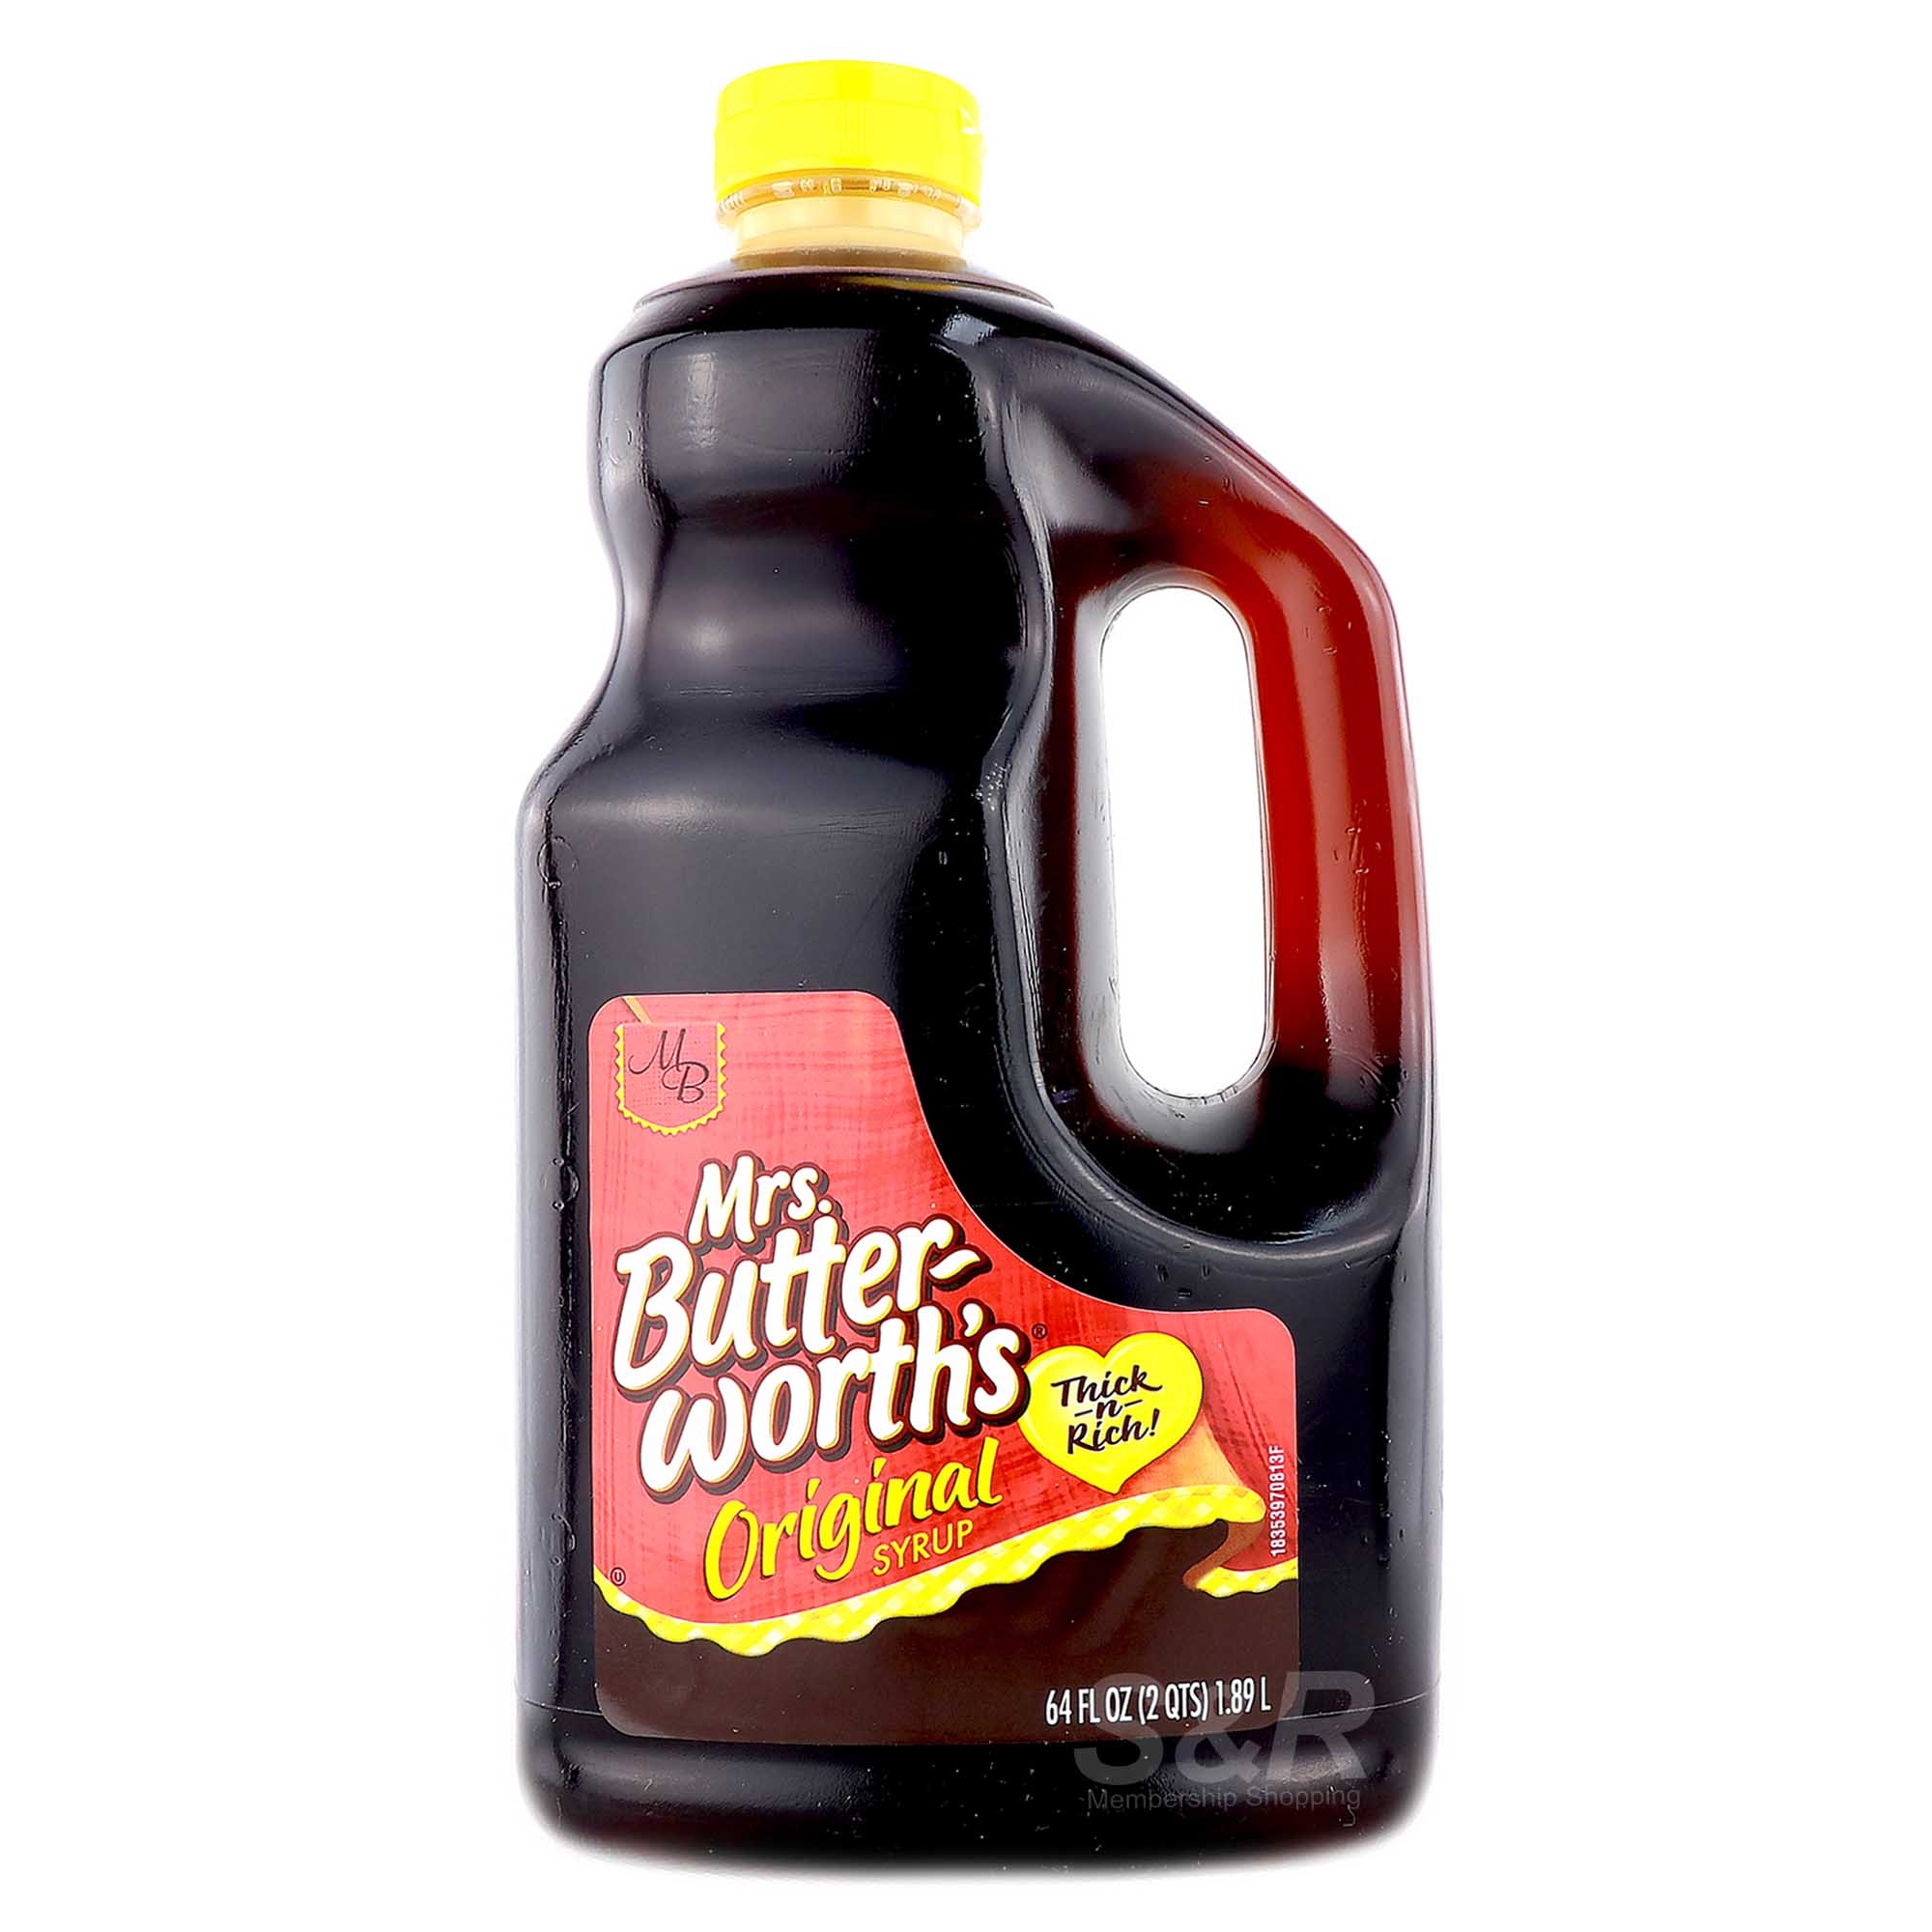 Mrs. Butterworth's Original Syrup 1.89L